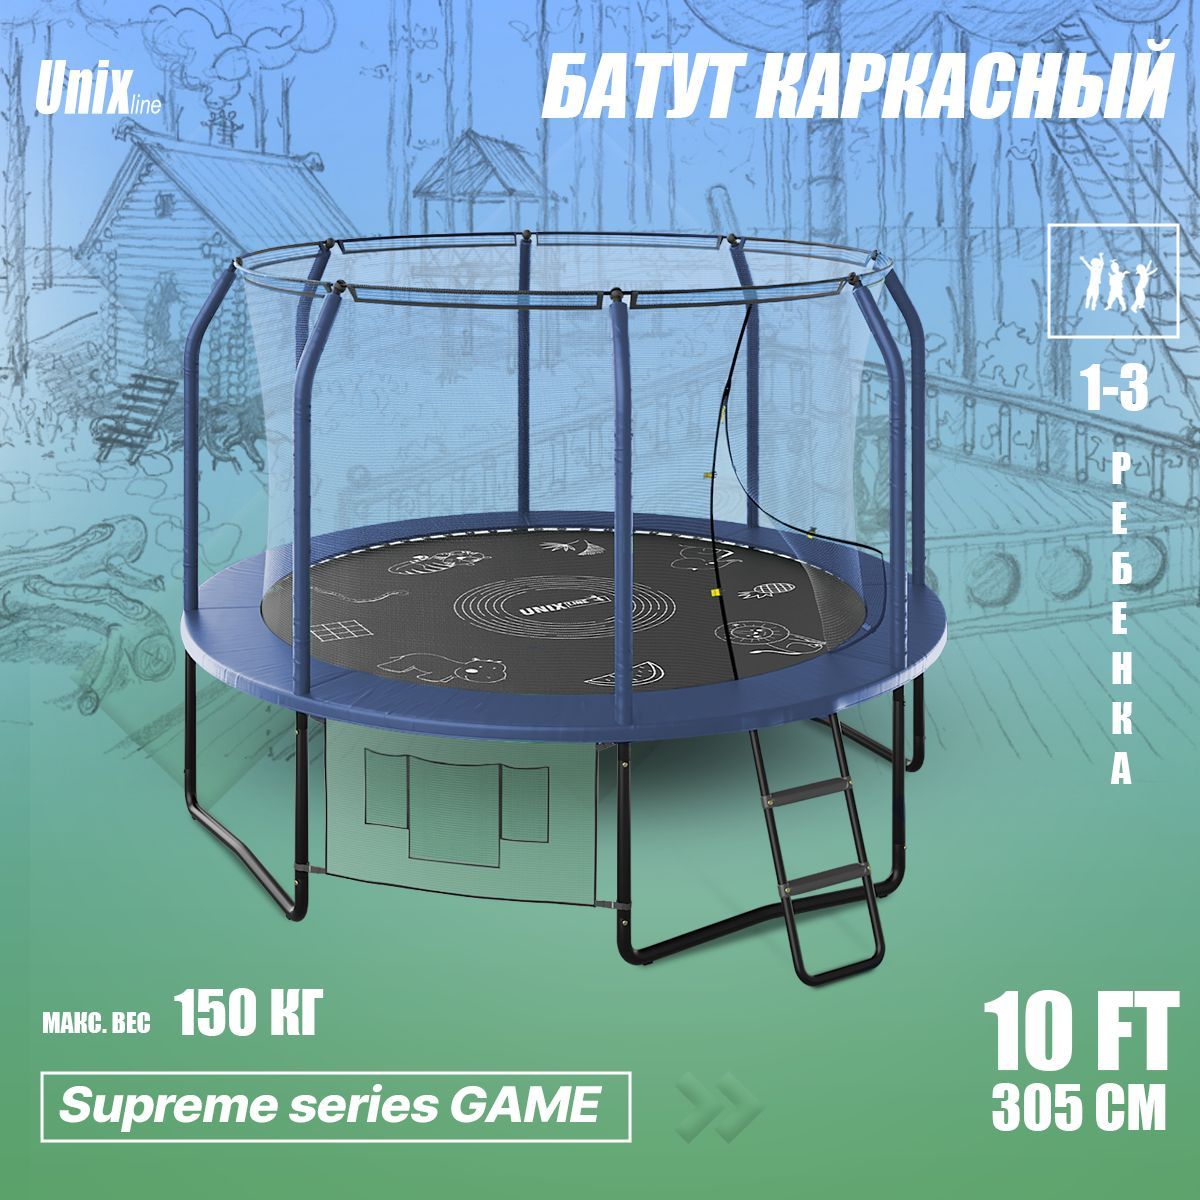 Unix line Supreme game 10 ft. Unix line supreme game